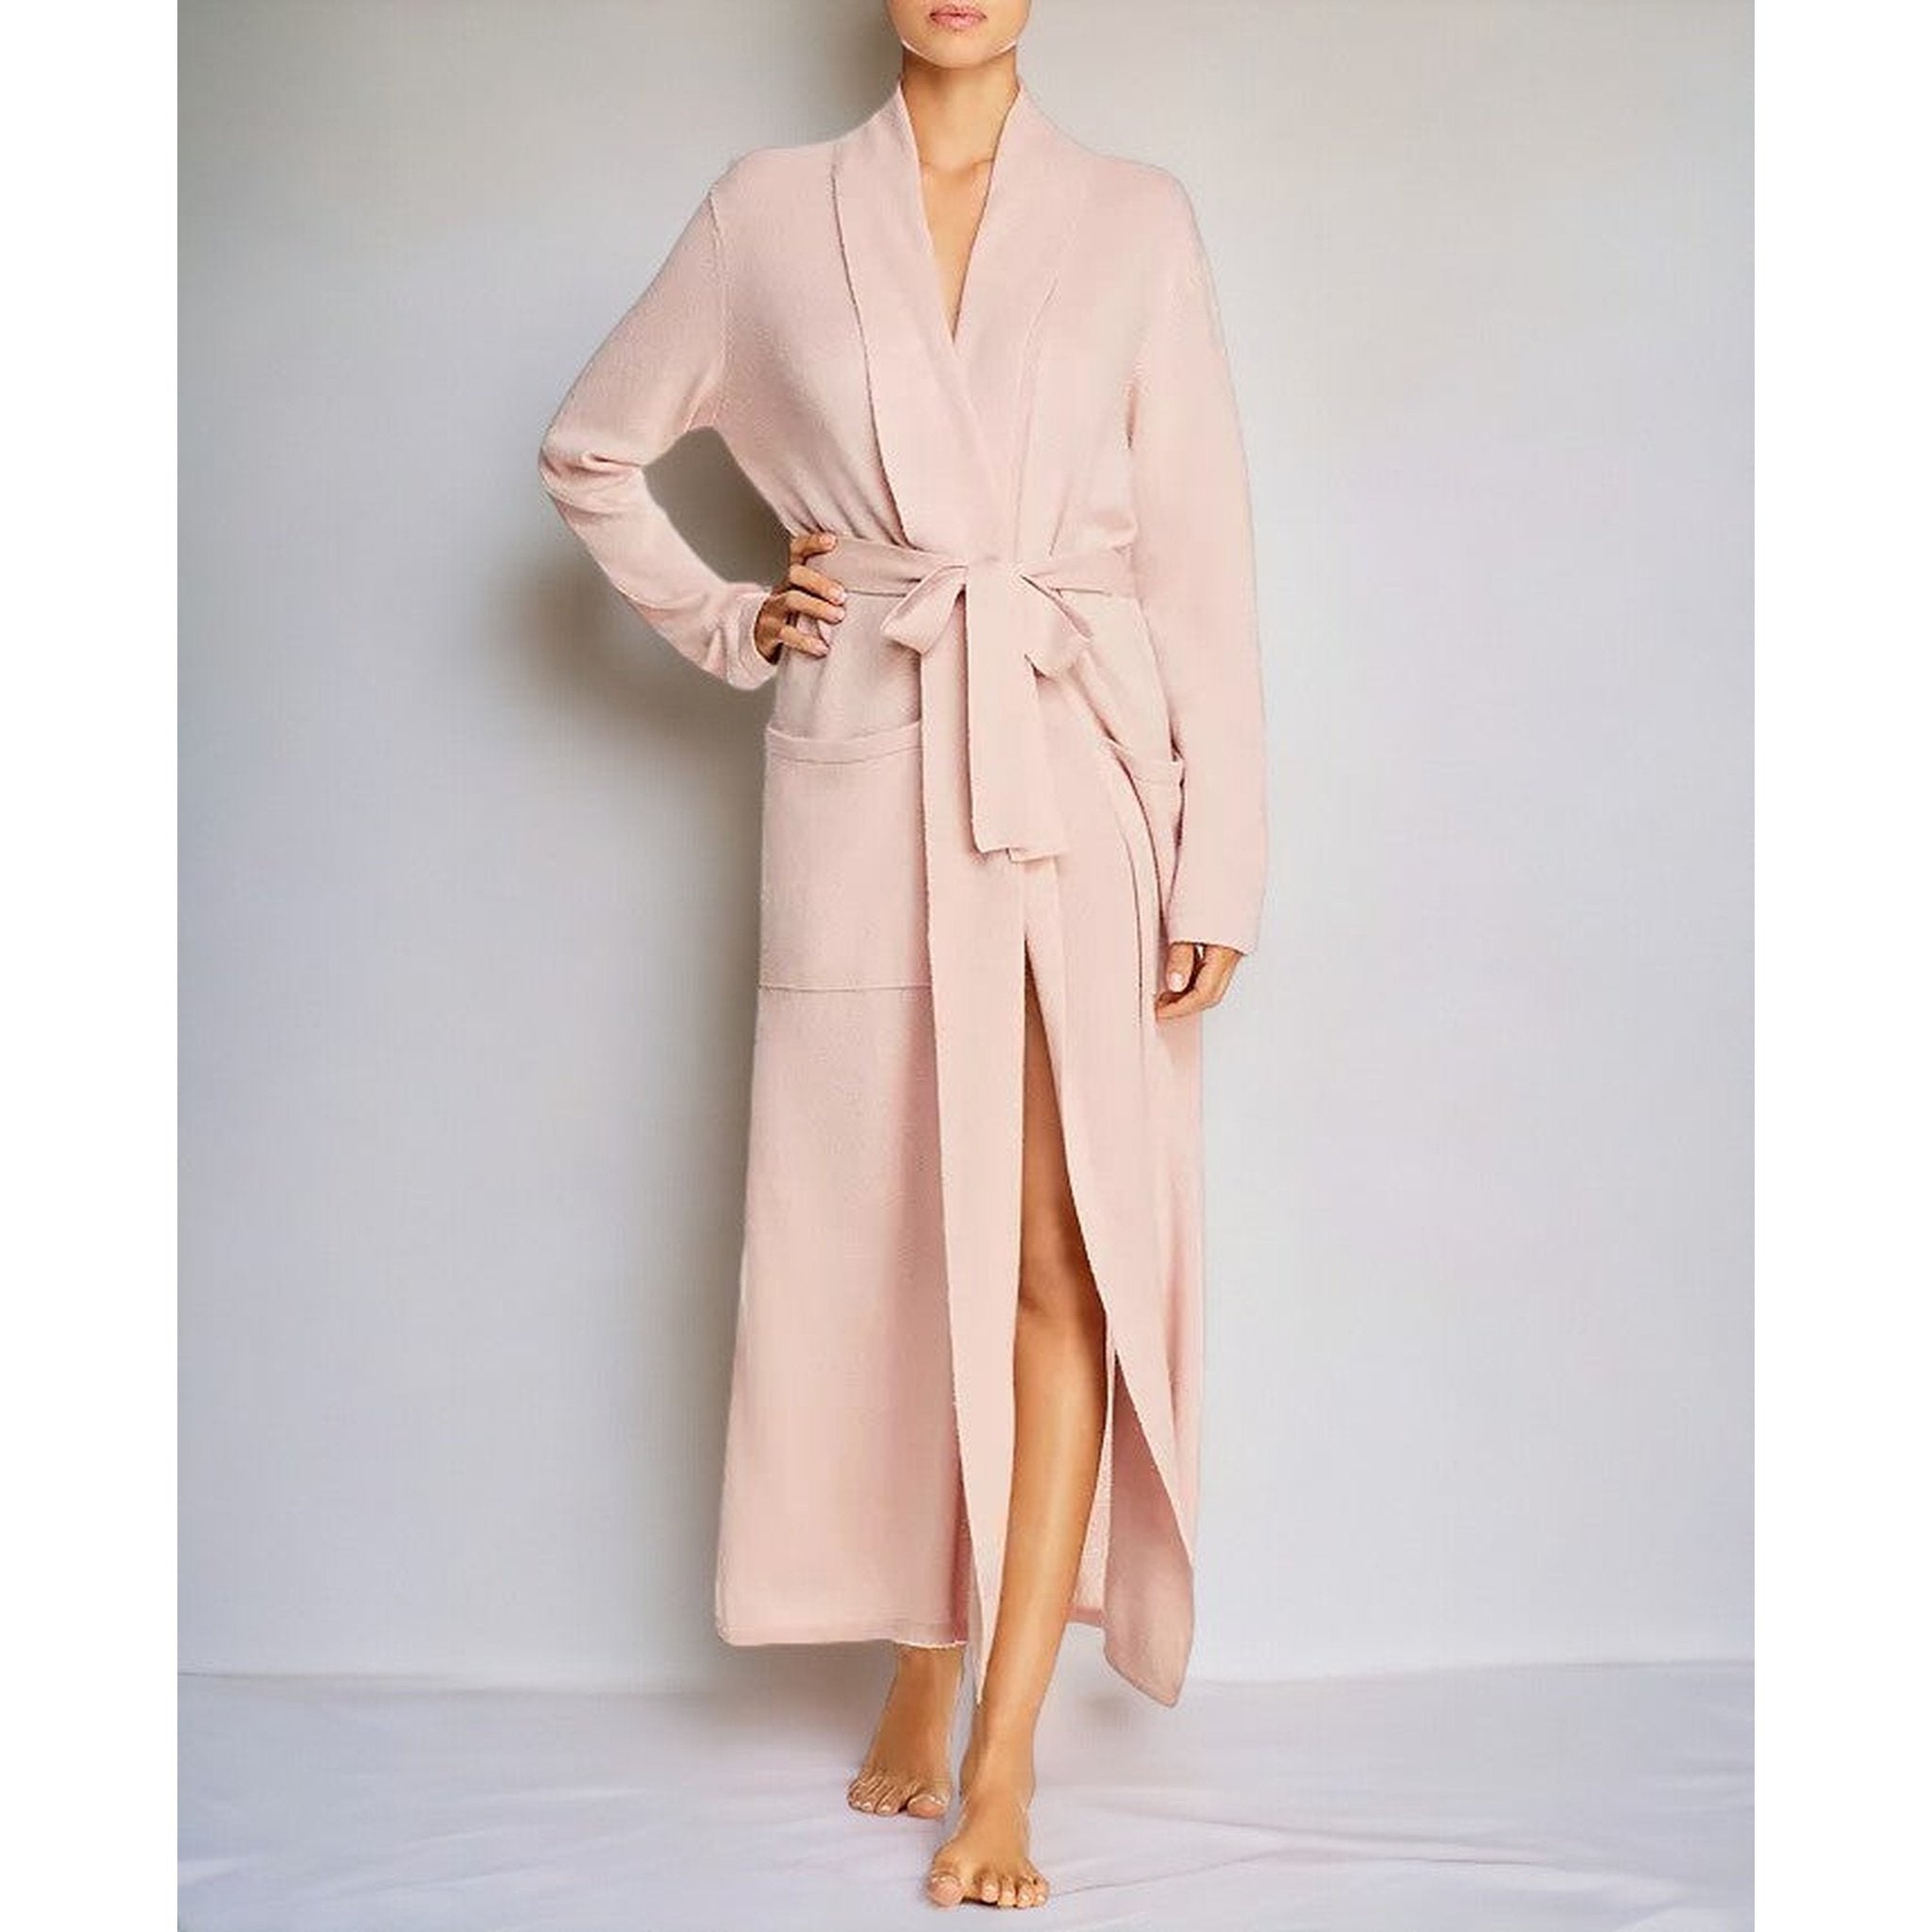 Arlotta Cashmere Classic Long Robe in Pink